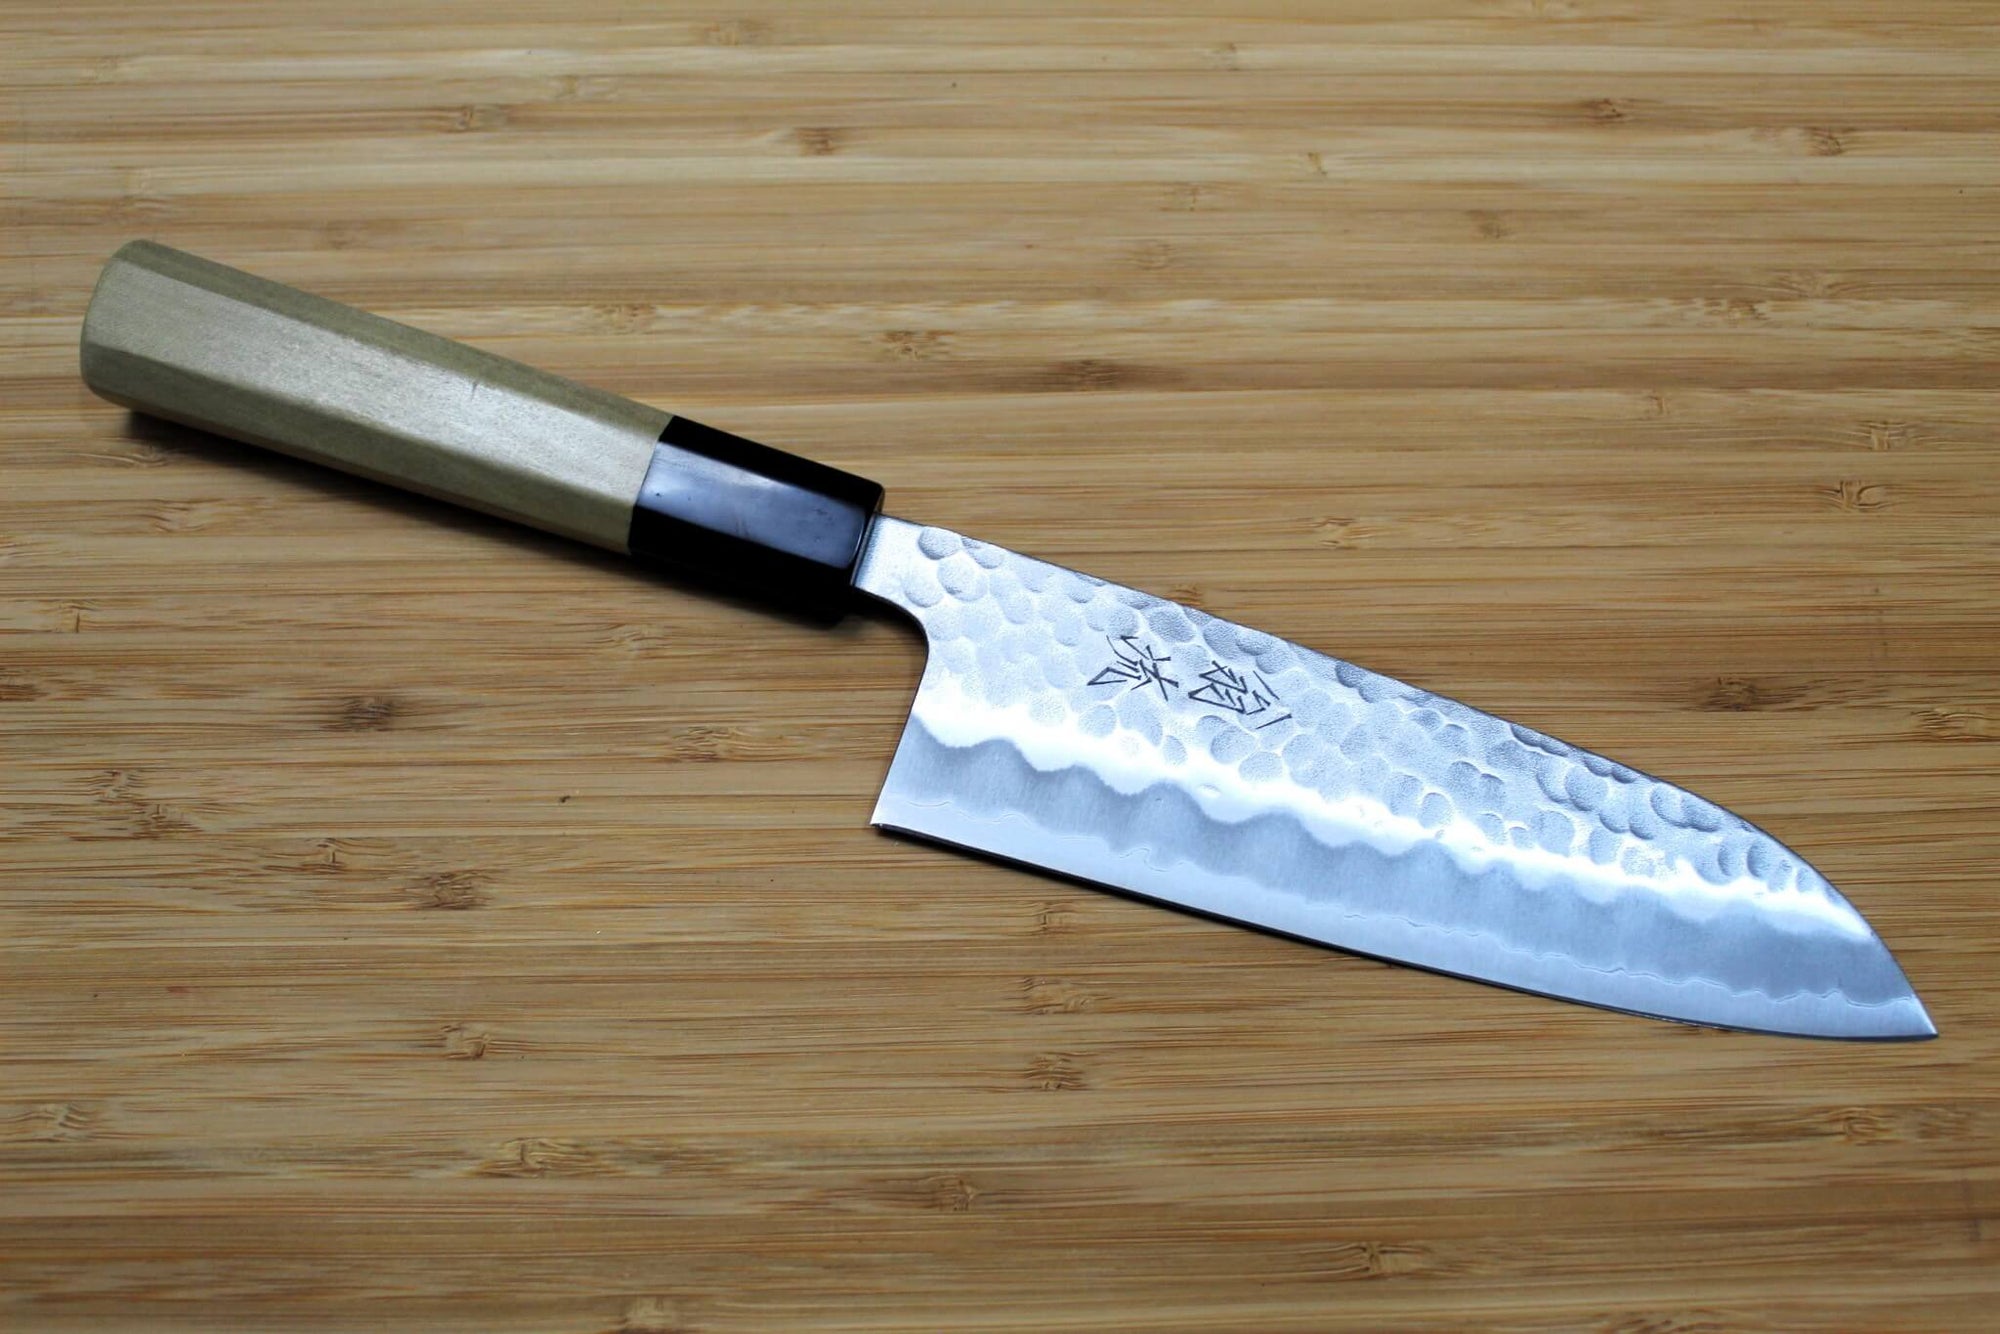 INNOVATIONwhite™ 5.5 Ceramic Santoku Knife - White Z212 Blade with  Non-Slip Blue Handle